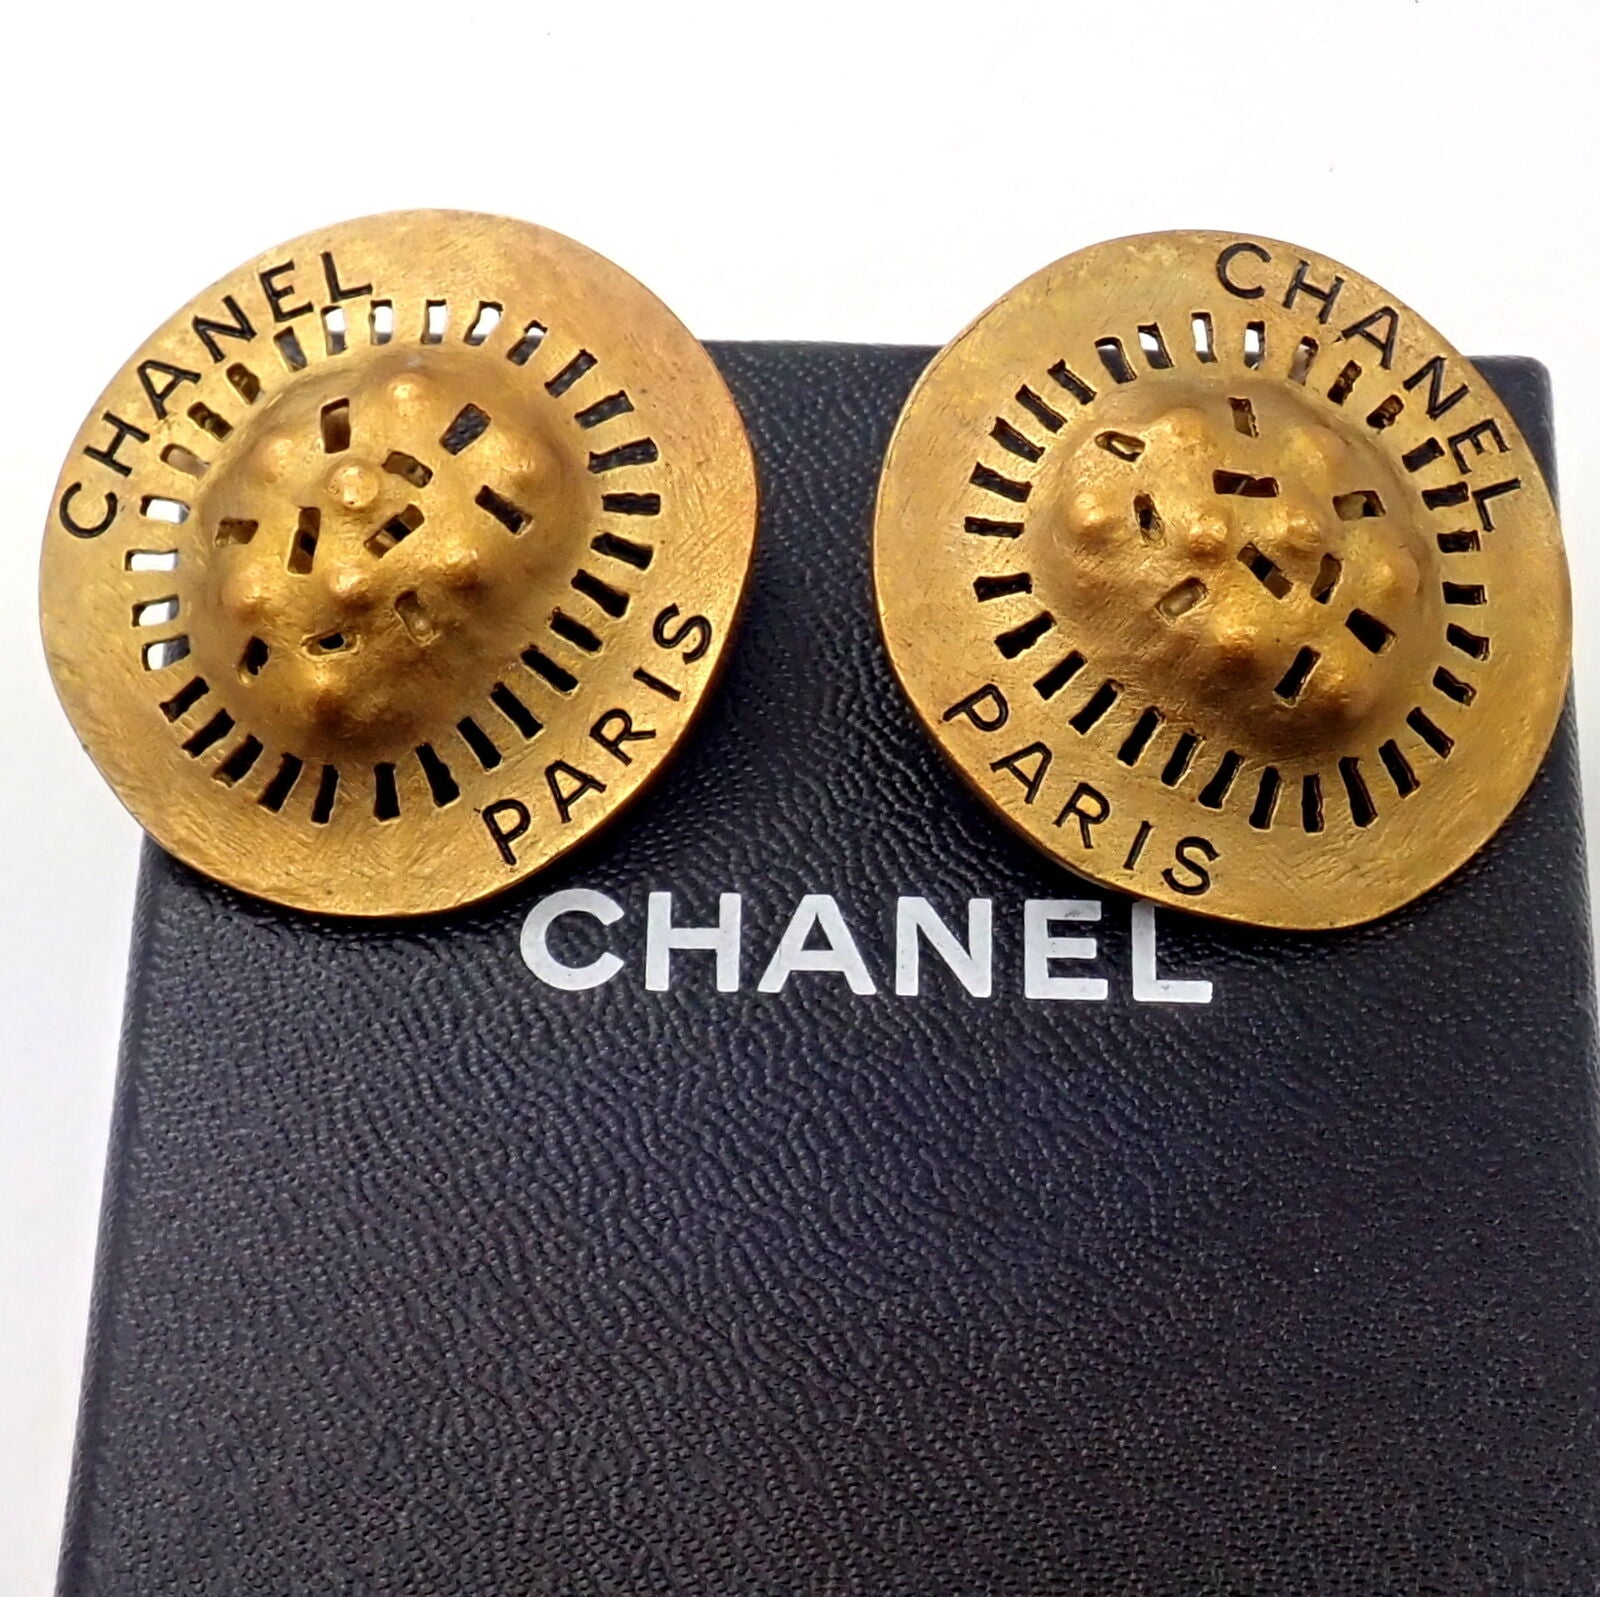 Rare! Vintage Chanel Paris France Medallion Earrings 1994 Fall